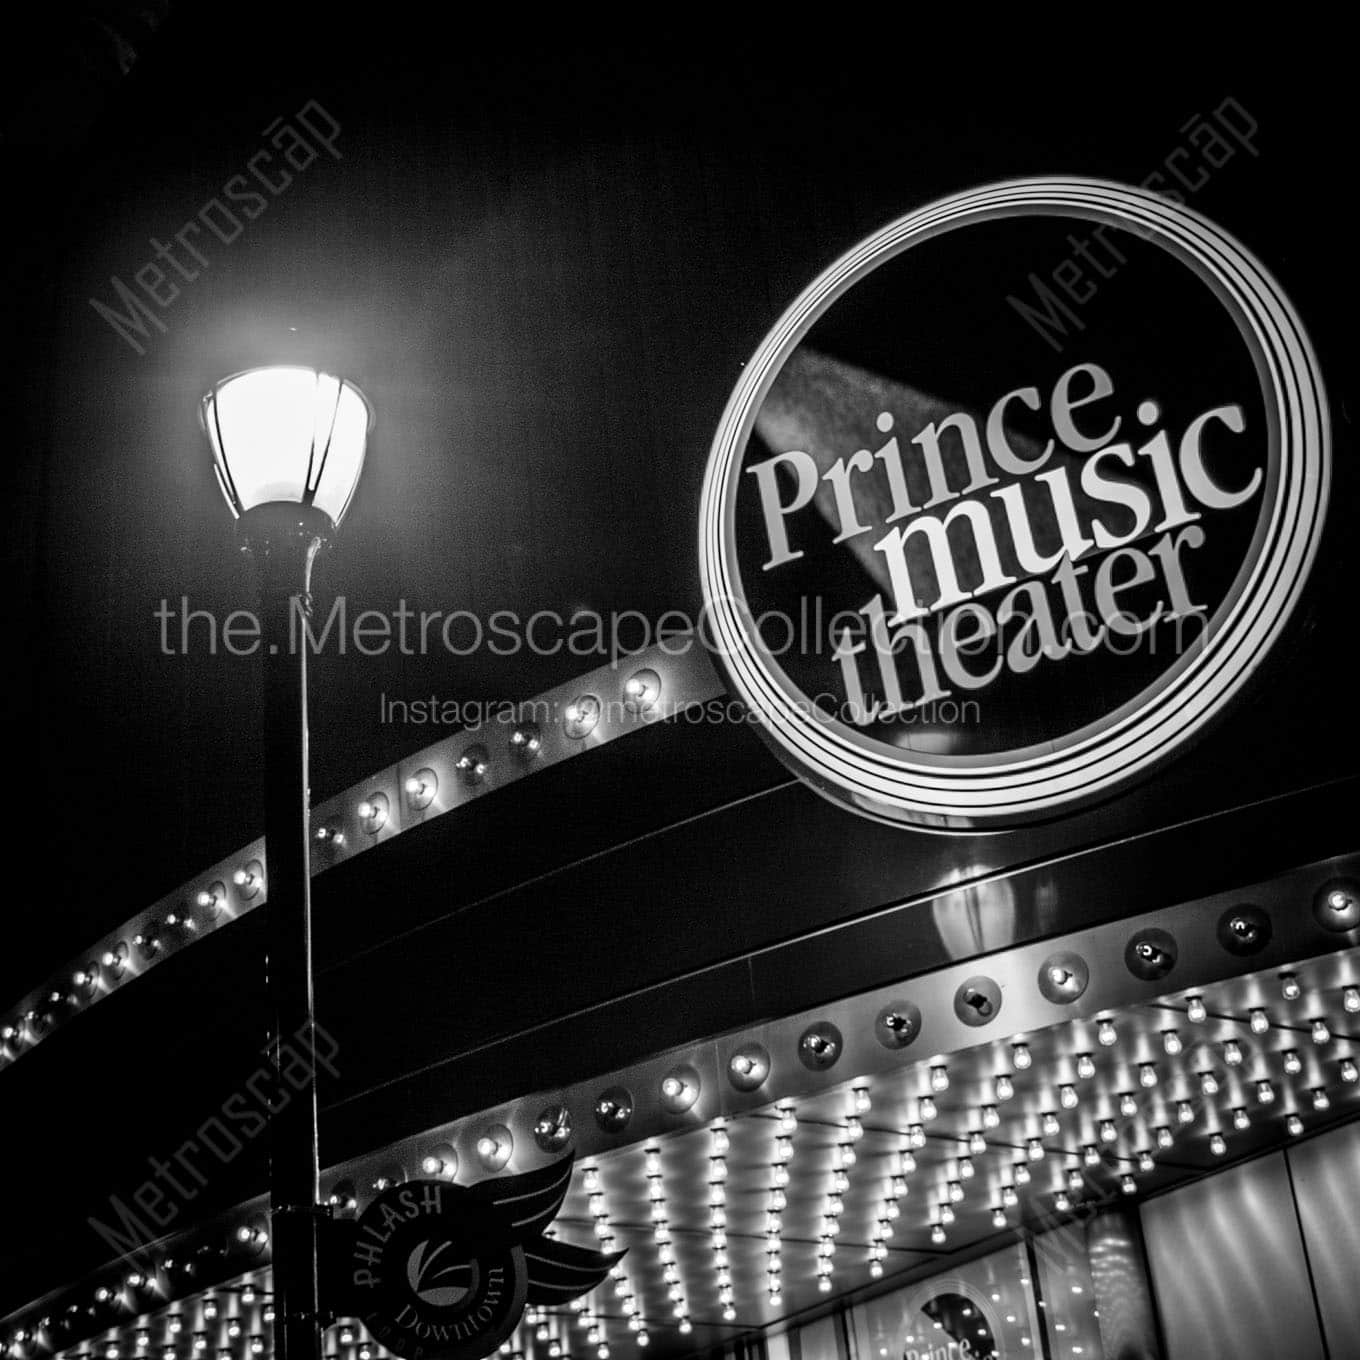 prince music theater chestnut street Black & White Office Art